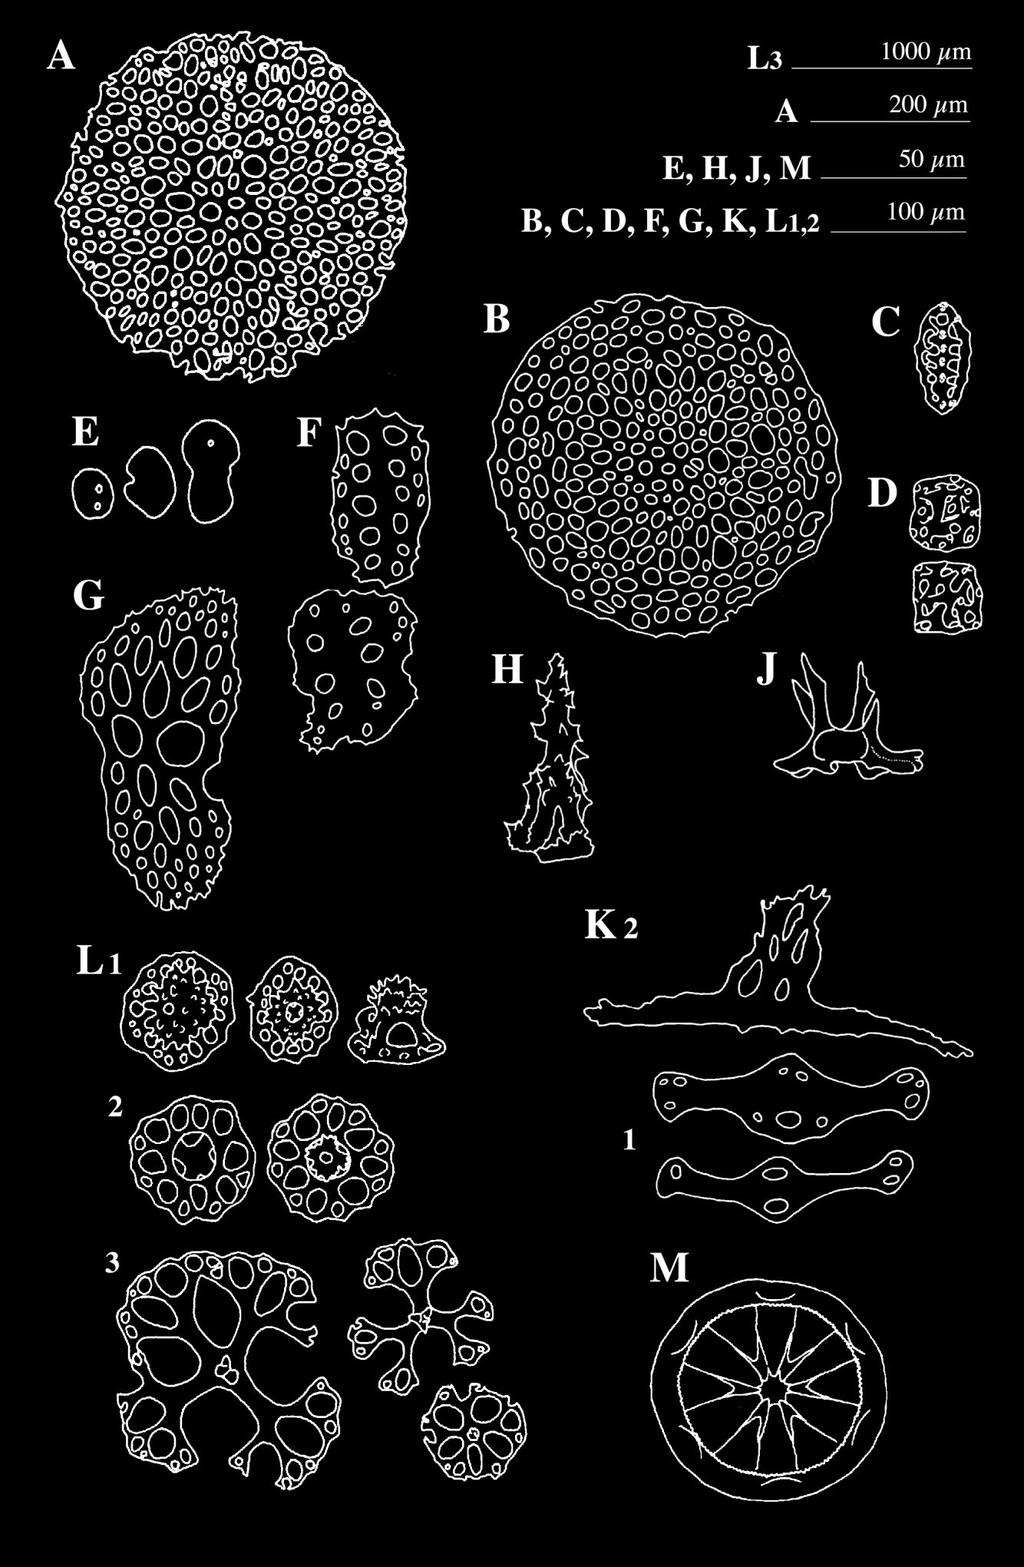 Larvae: bilateral